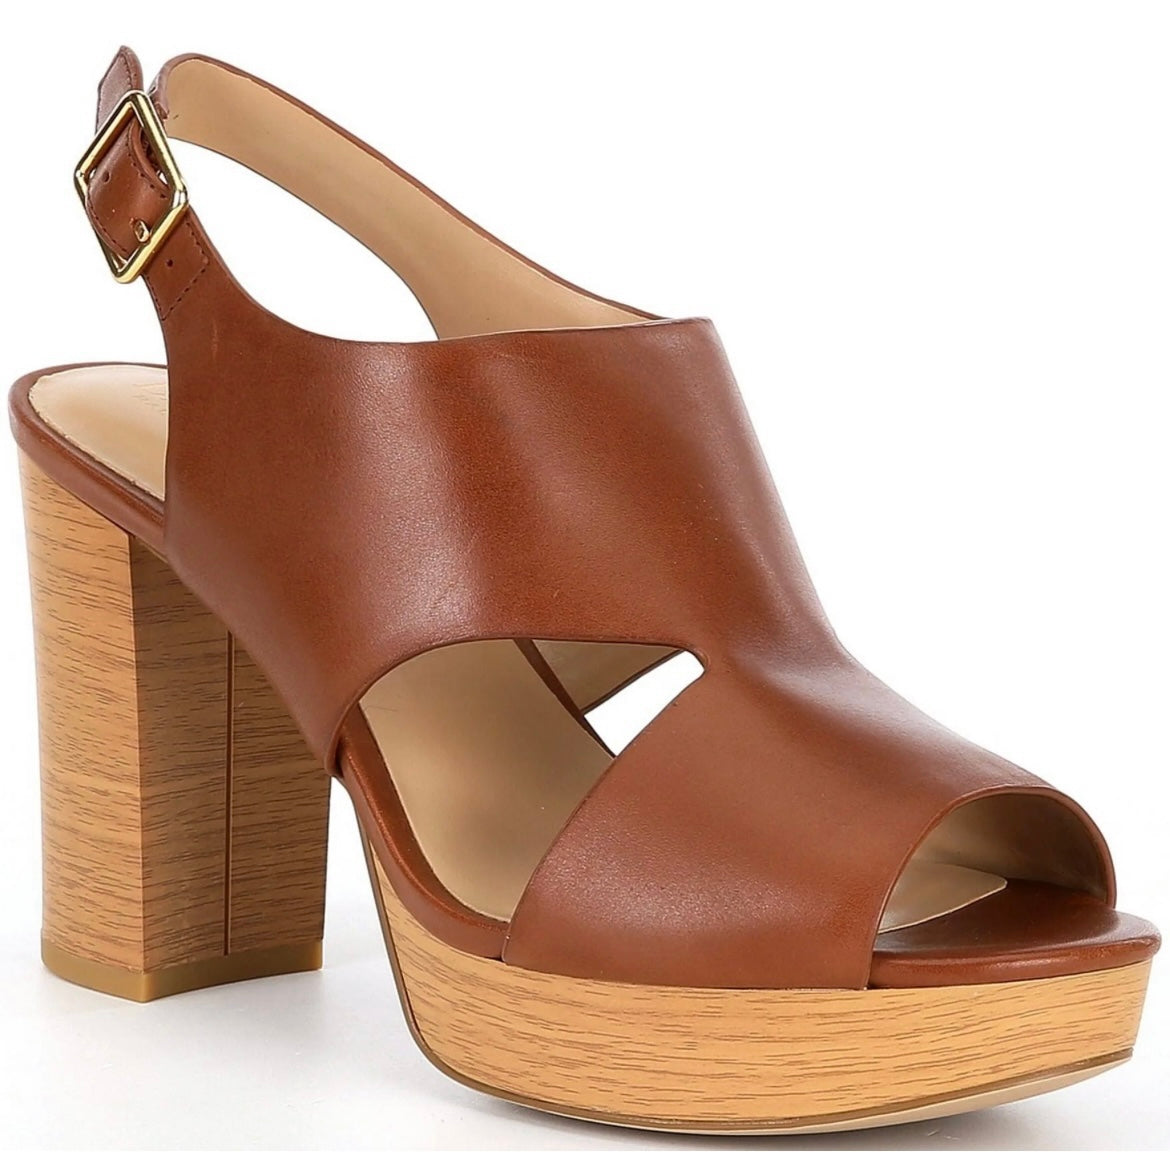 FEONA Dress Sandals Leather Deep Saddle Tan Size 9.5 Women's Platforms